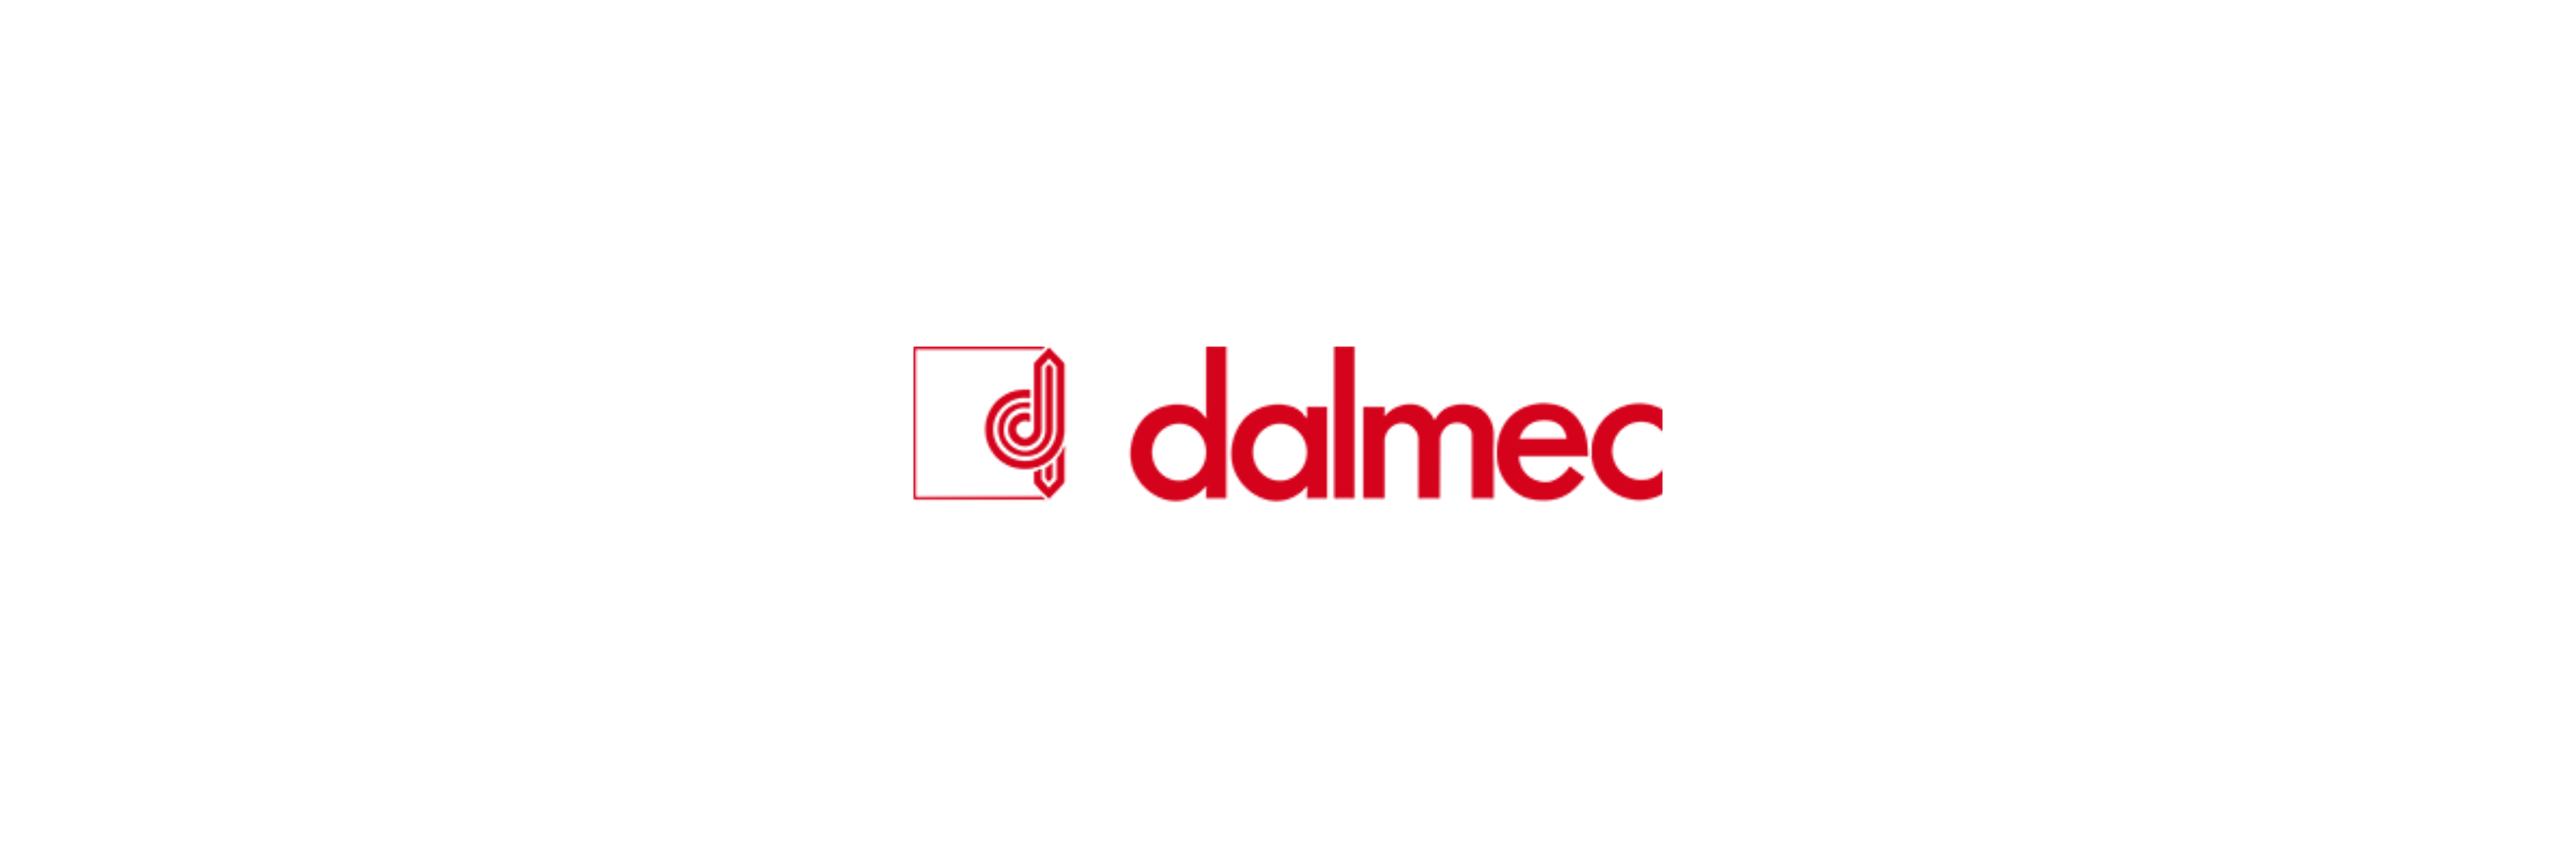 Dalmec - Klenk Maschinenhandel